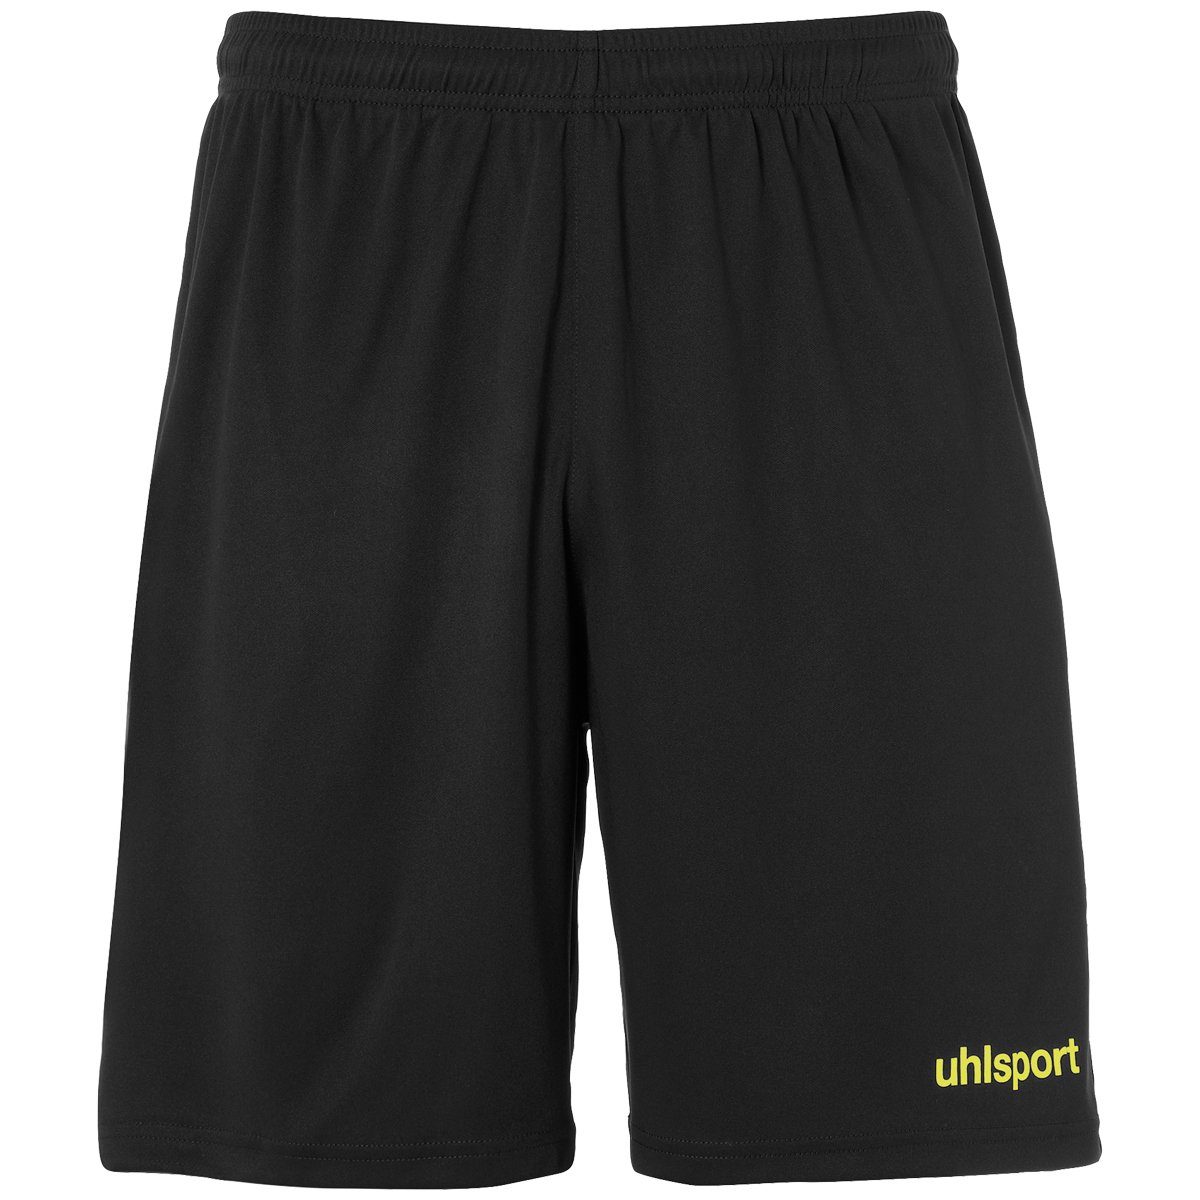 uhlsport Shorts uhlsport schwarz/fluo gelb Shorts